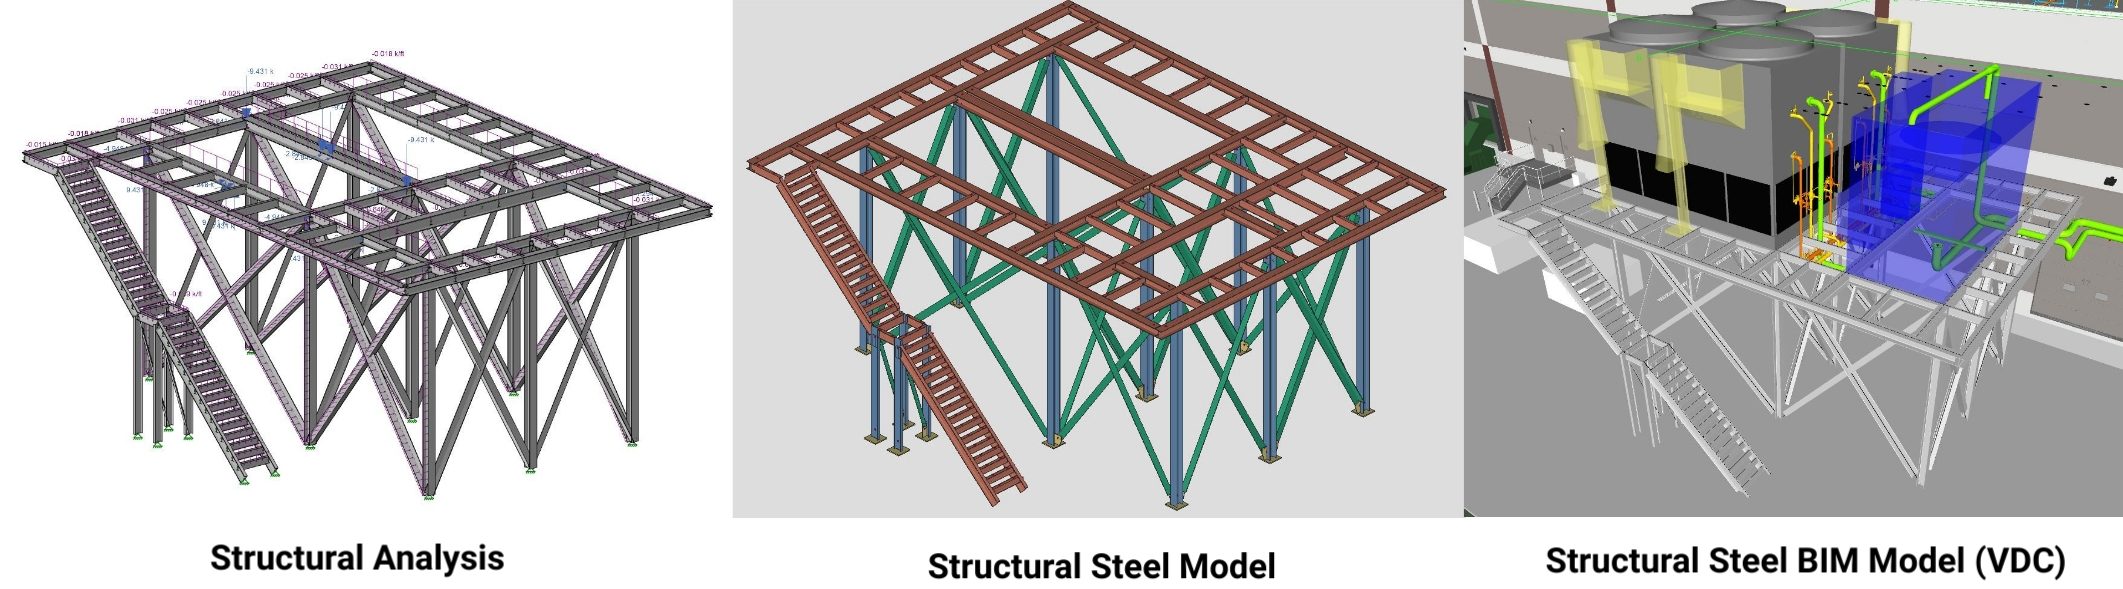 Structural-Steel-Analysis-Model-BIM-VDC-Industrial-Refrigeration 